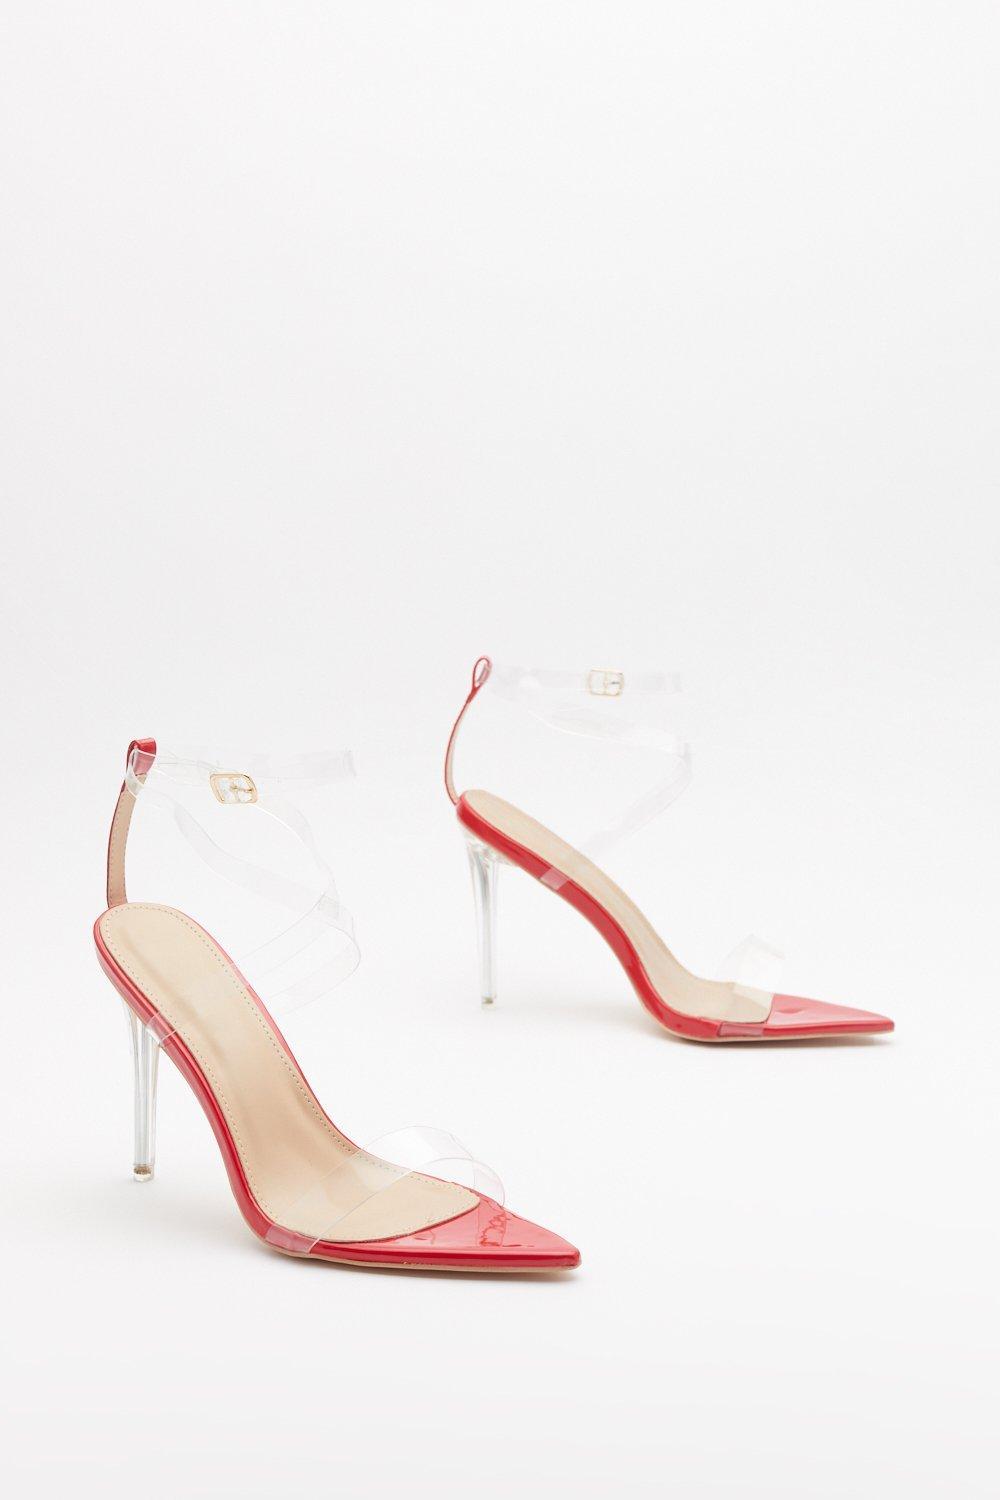 red pointed sandal heels